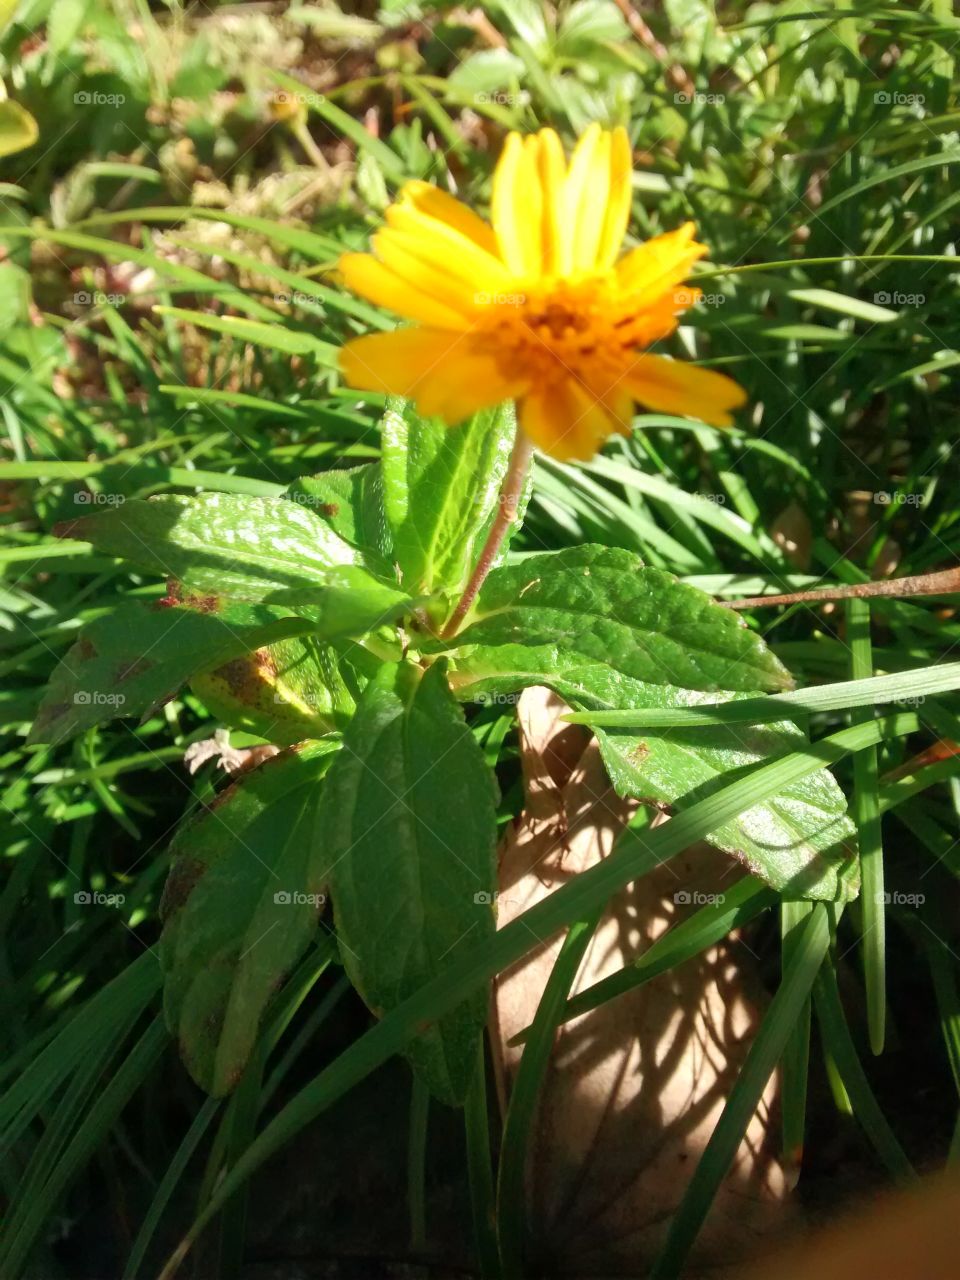 litle amarelo flower